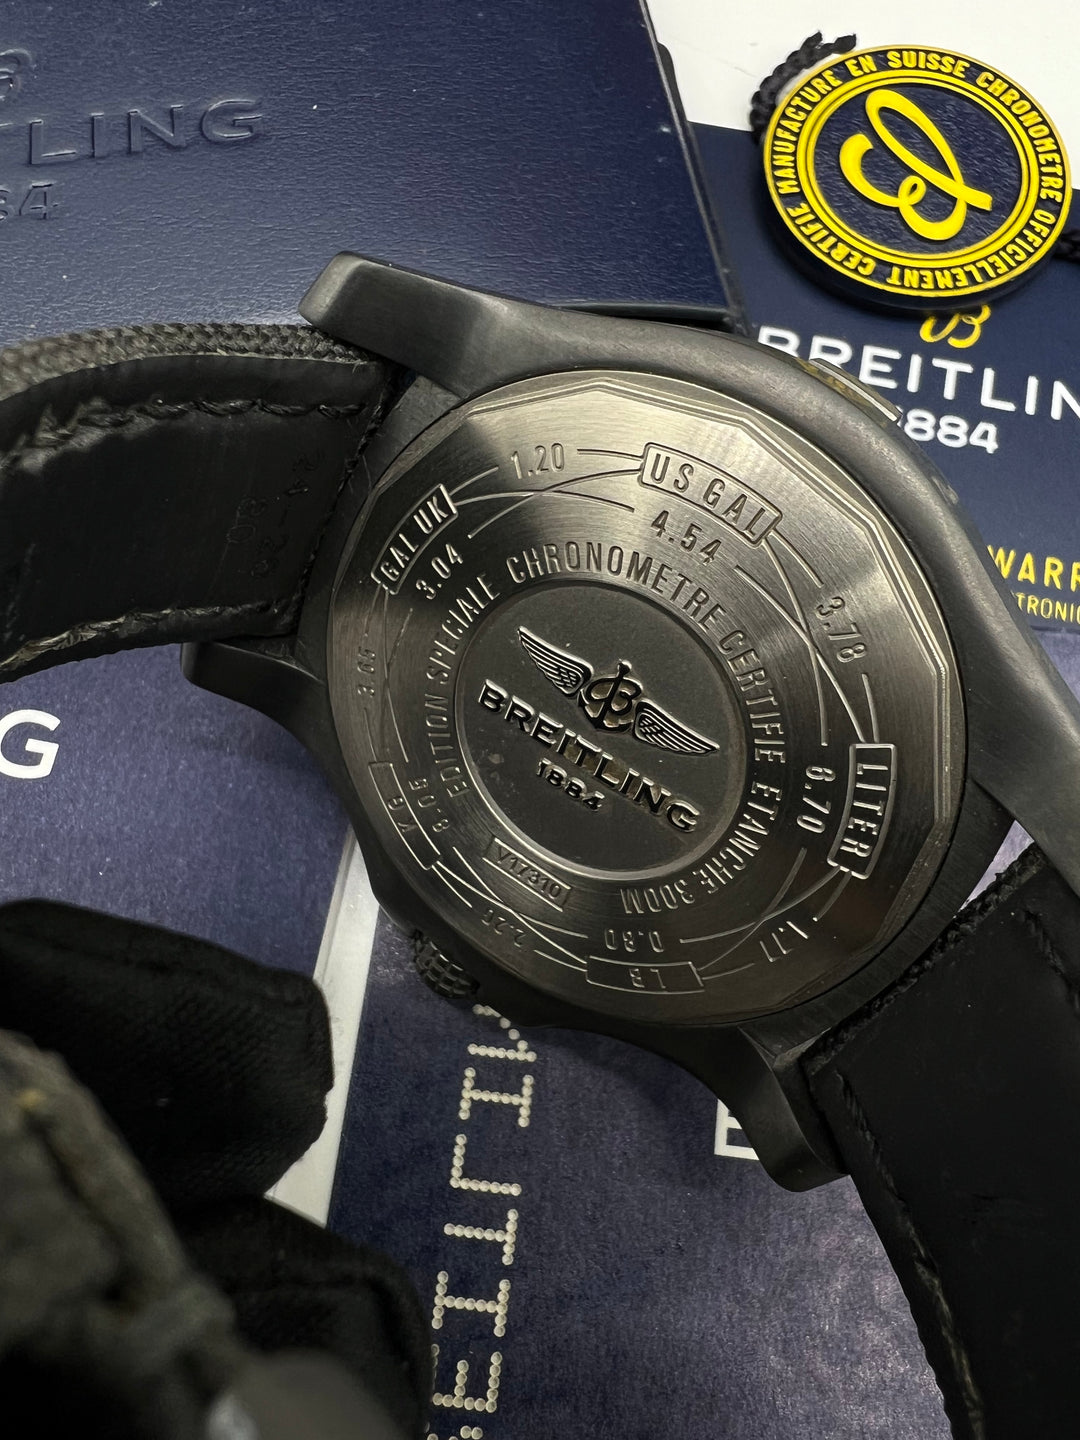 New Arrival Z Factory Replica Breitling Avenger Titanium Watch – Black Bird Are Sailing The Sky